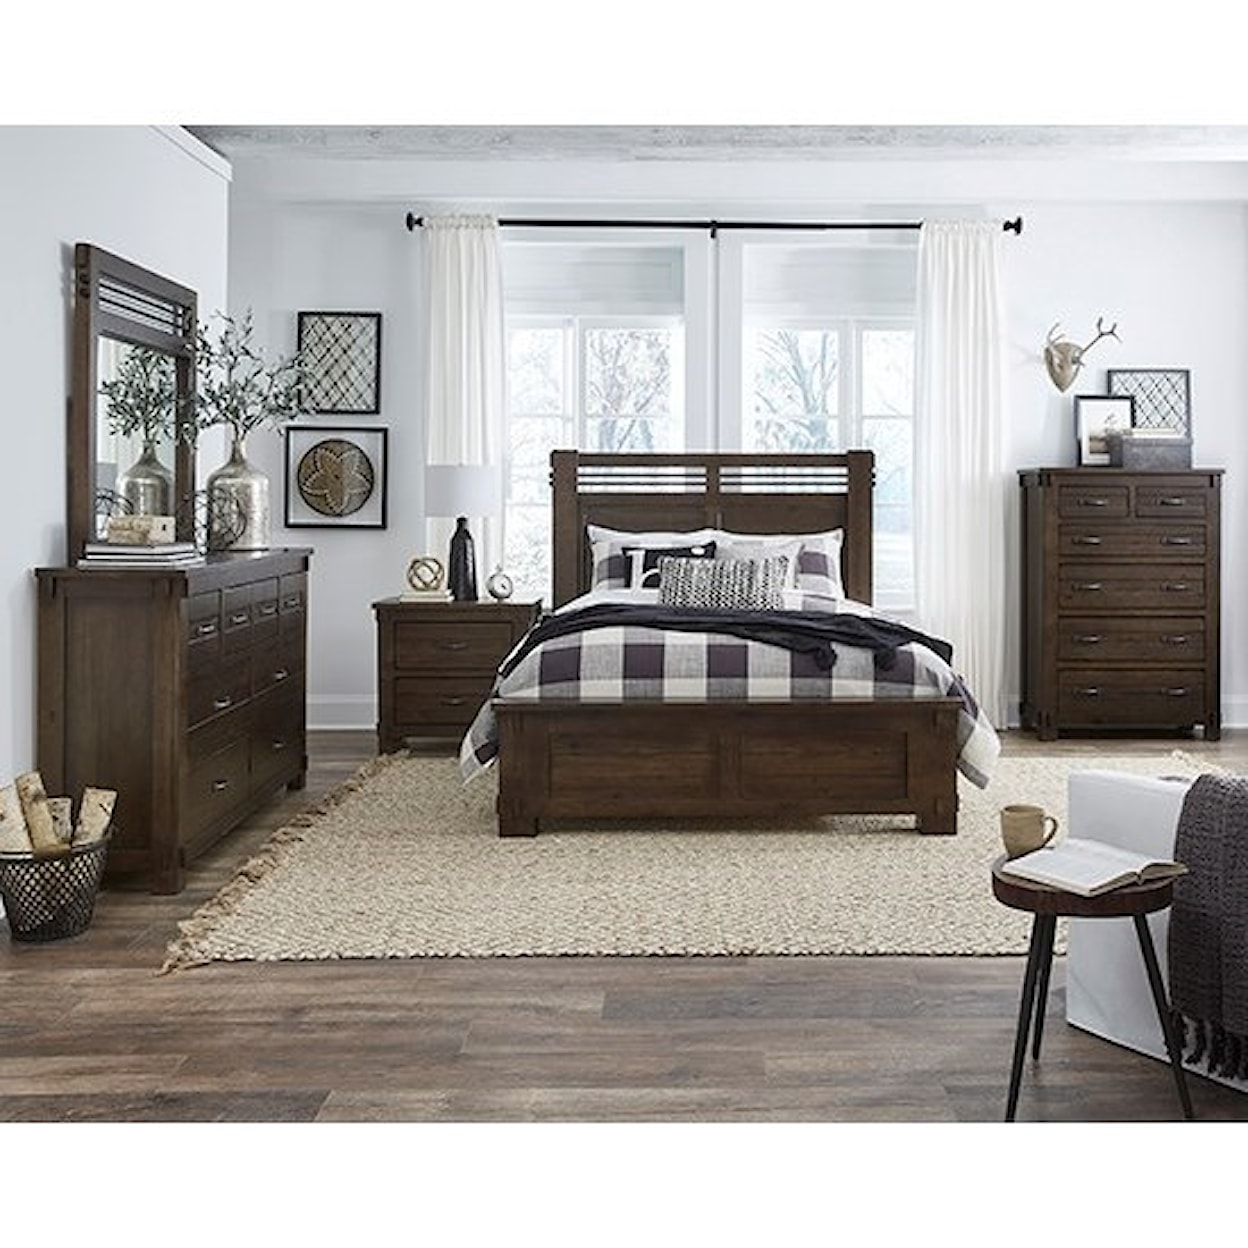 Progressive Furniture Thackery King Panel Bed